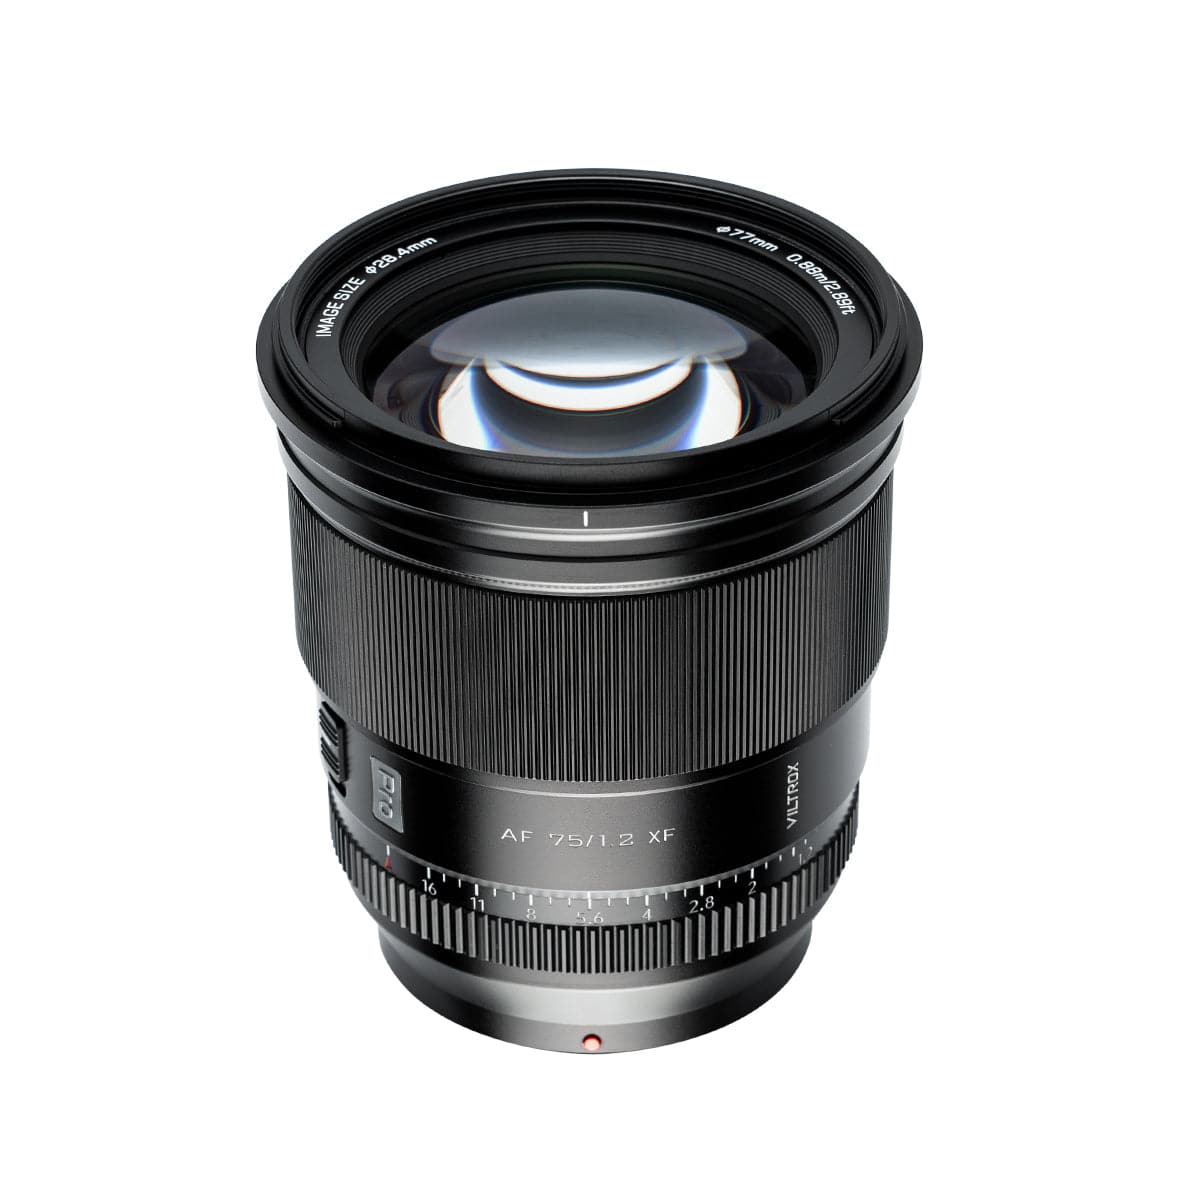 VILTROX PRO Series 75mm F1.2 XF Auto Focus Large Aperture Prime Lens Designed for Fujifilm X-mount Cameras